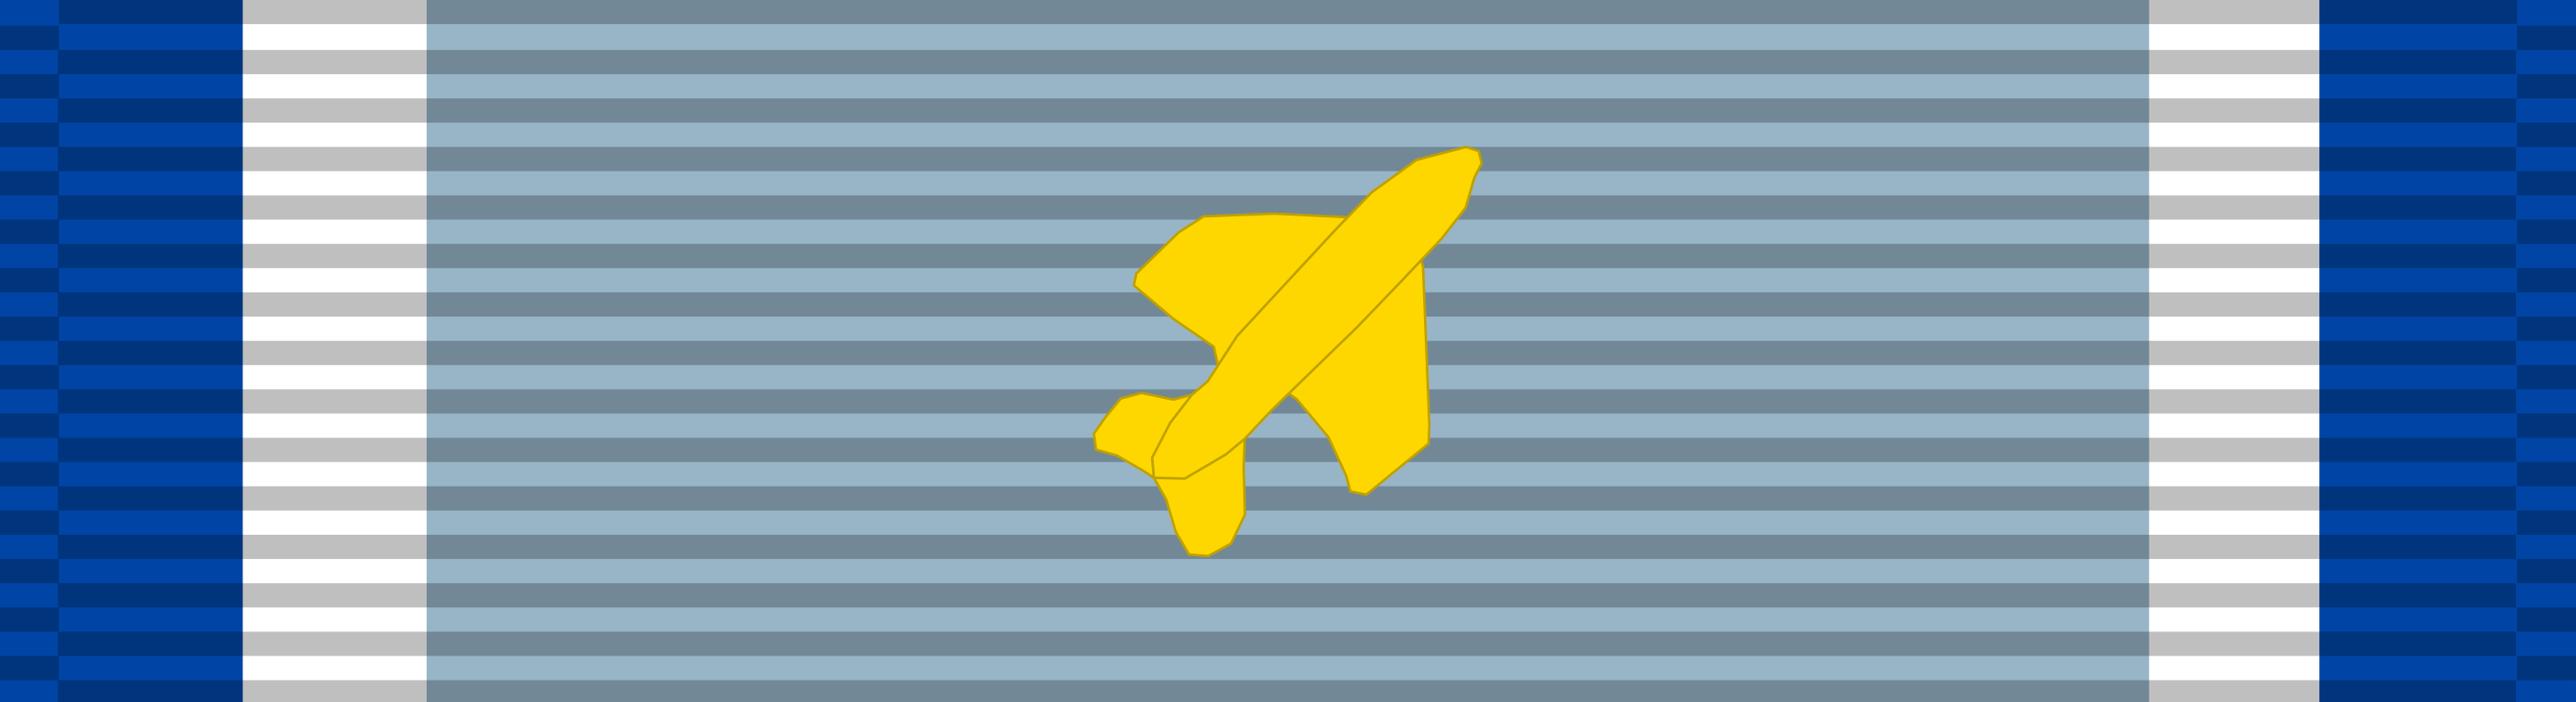 Vietnam Air Service Medal